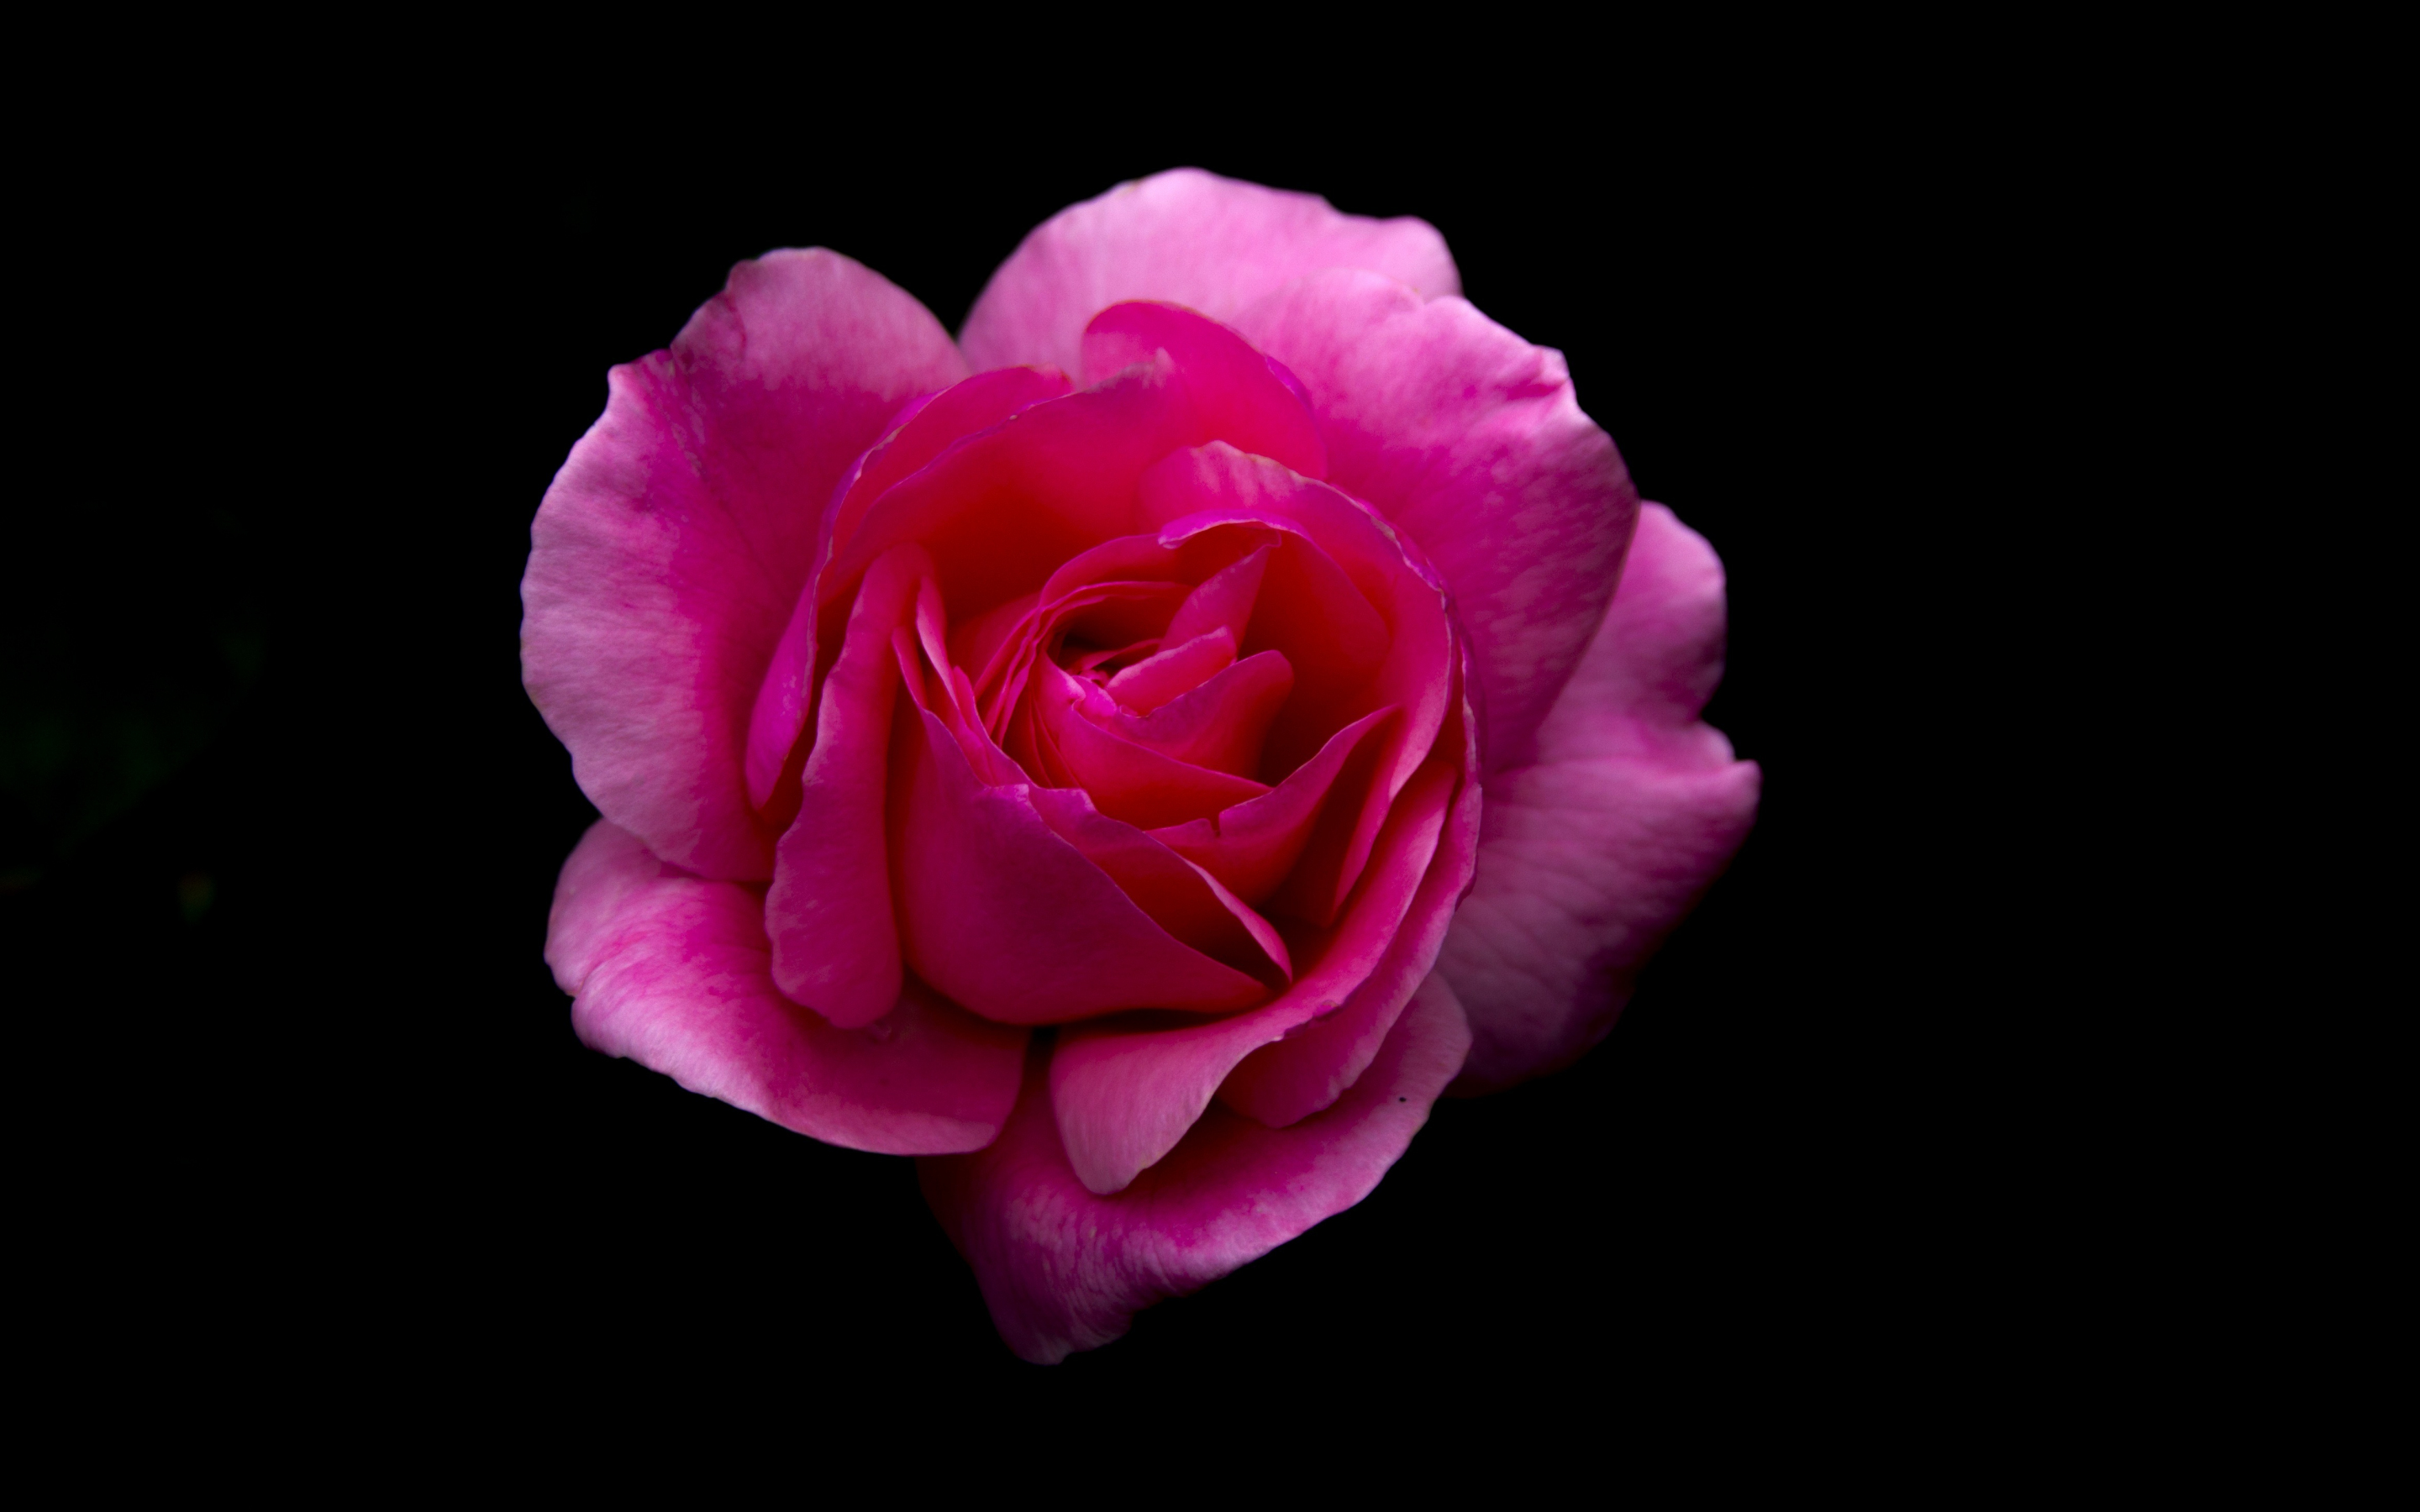 Rose, pink flower, portrait, 2880x1800 wallpaper